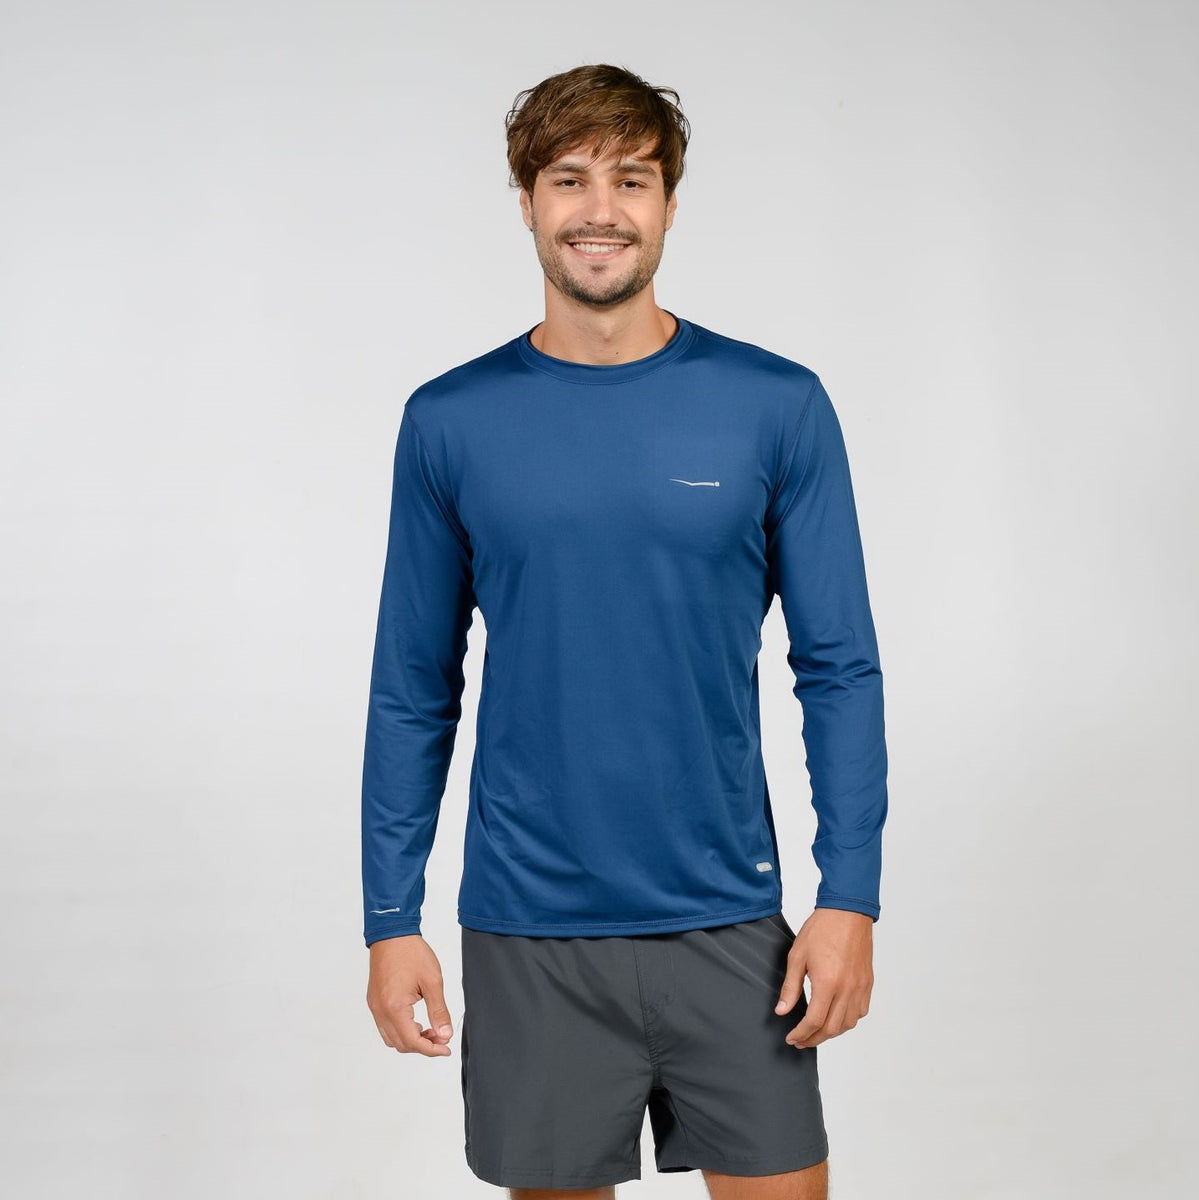 Men's Performance Long Sleeve Shirt – Wave Runner Sport